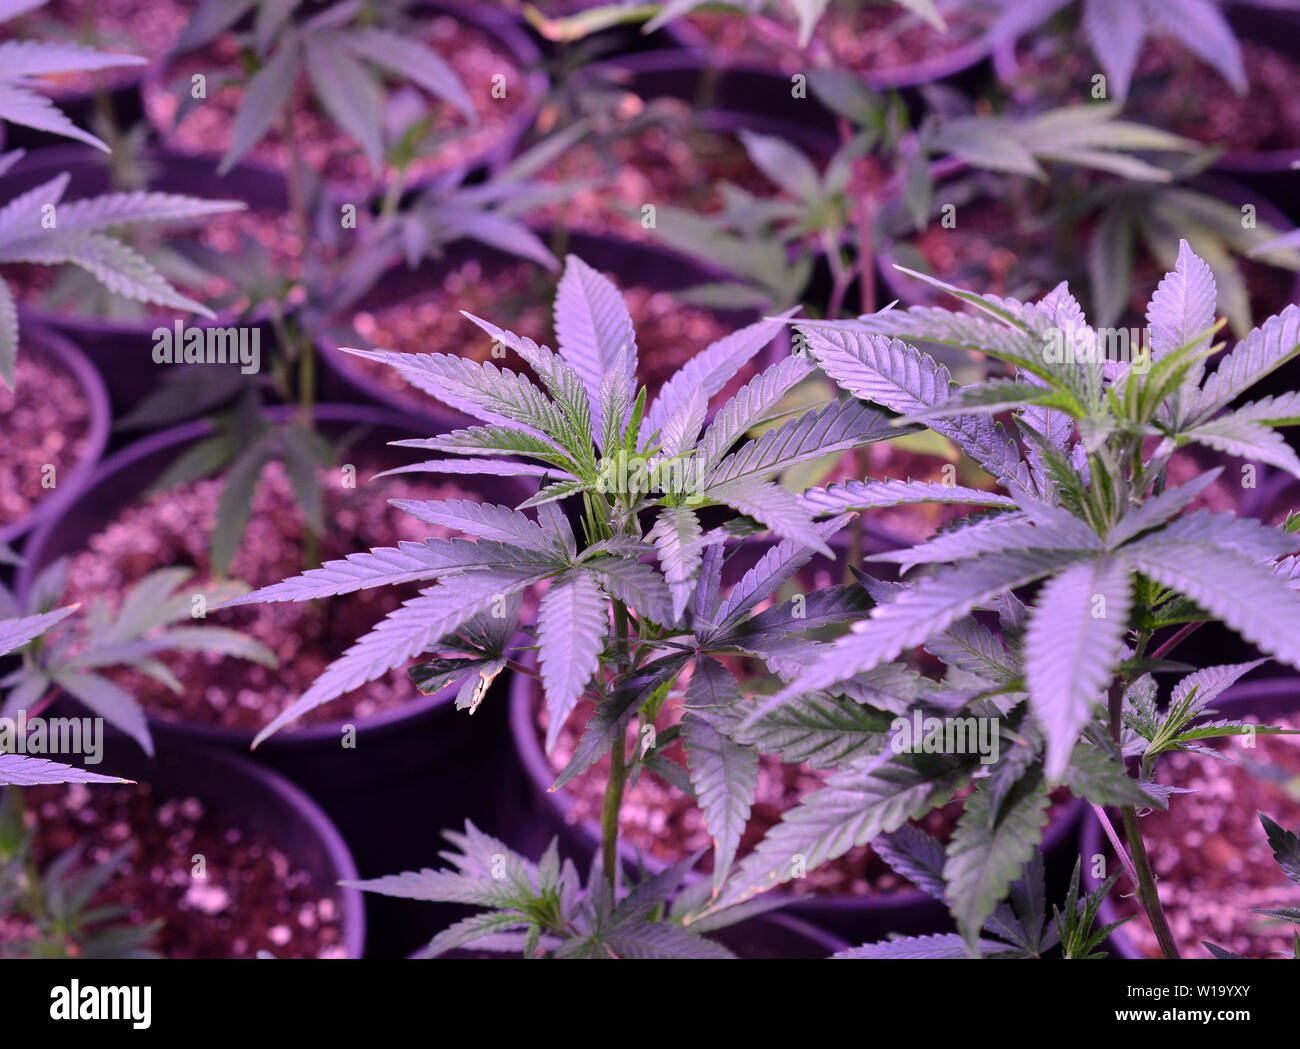 Marijuana. Marijuana and Cannabis growing indoors. Marijuana Grow Tent with  lights. Medical and Recreational Cannabis plants.image Stock Photo - Alamy